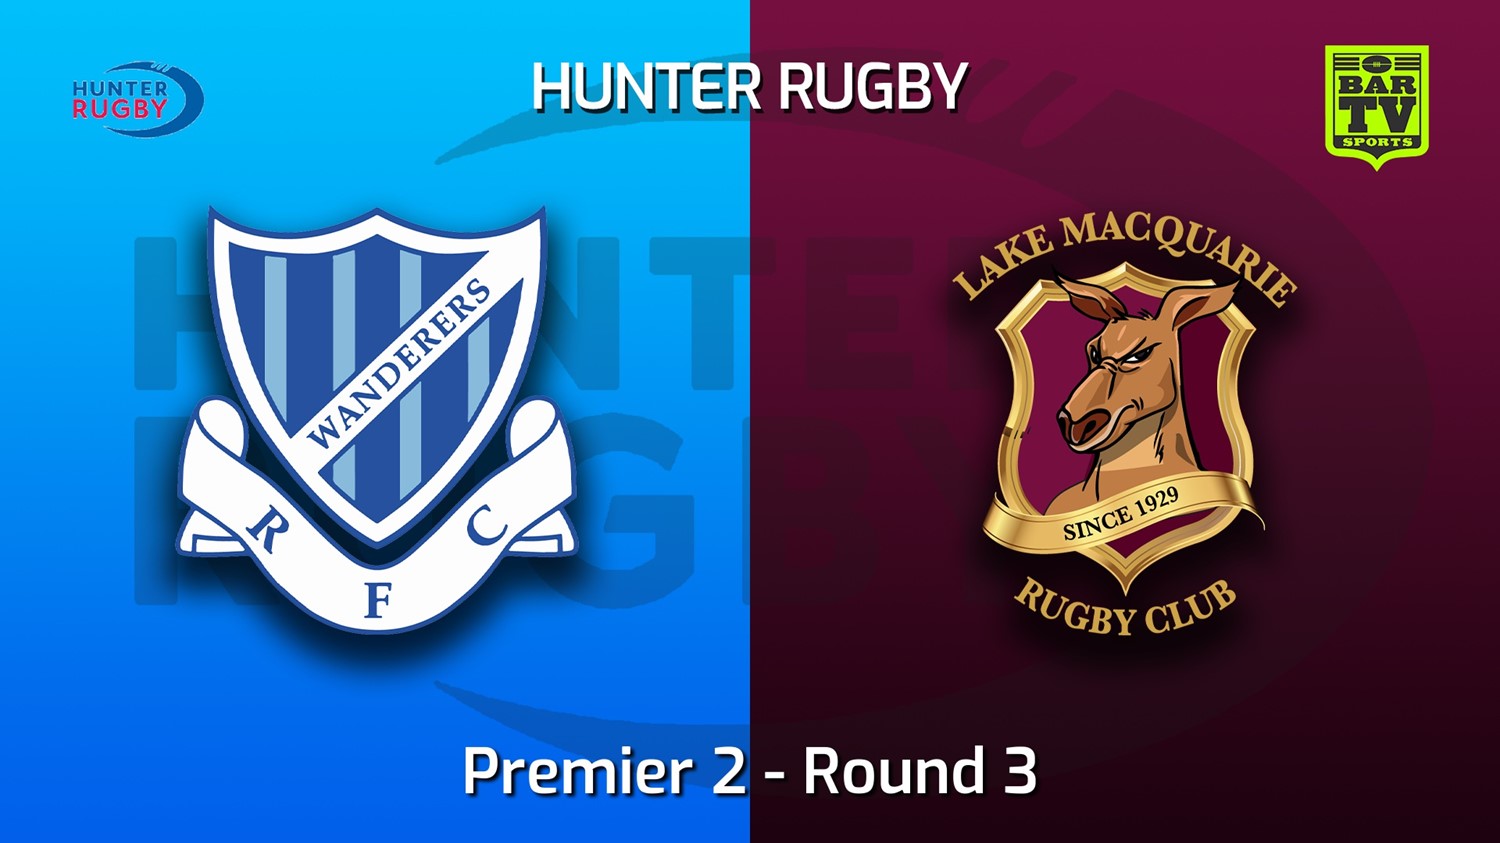 220507-Hunter Rugby Round 3 - Premier 2 - Wanderers v Lake Macquarie Slate Image